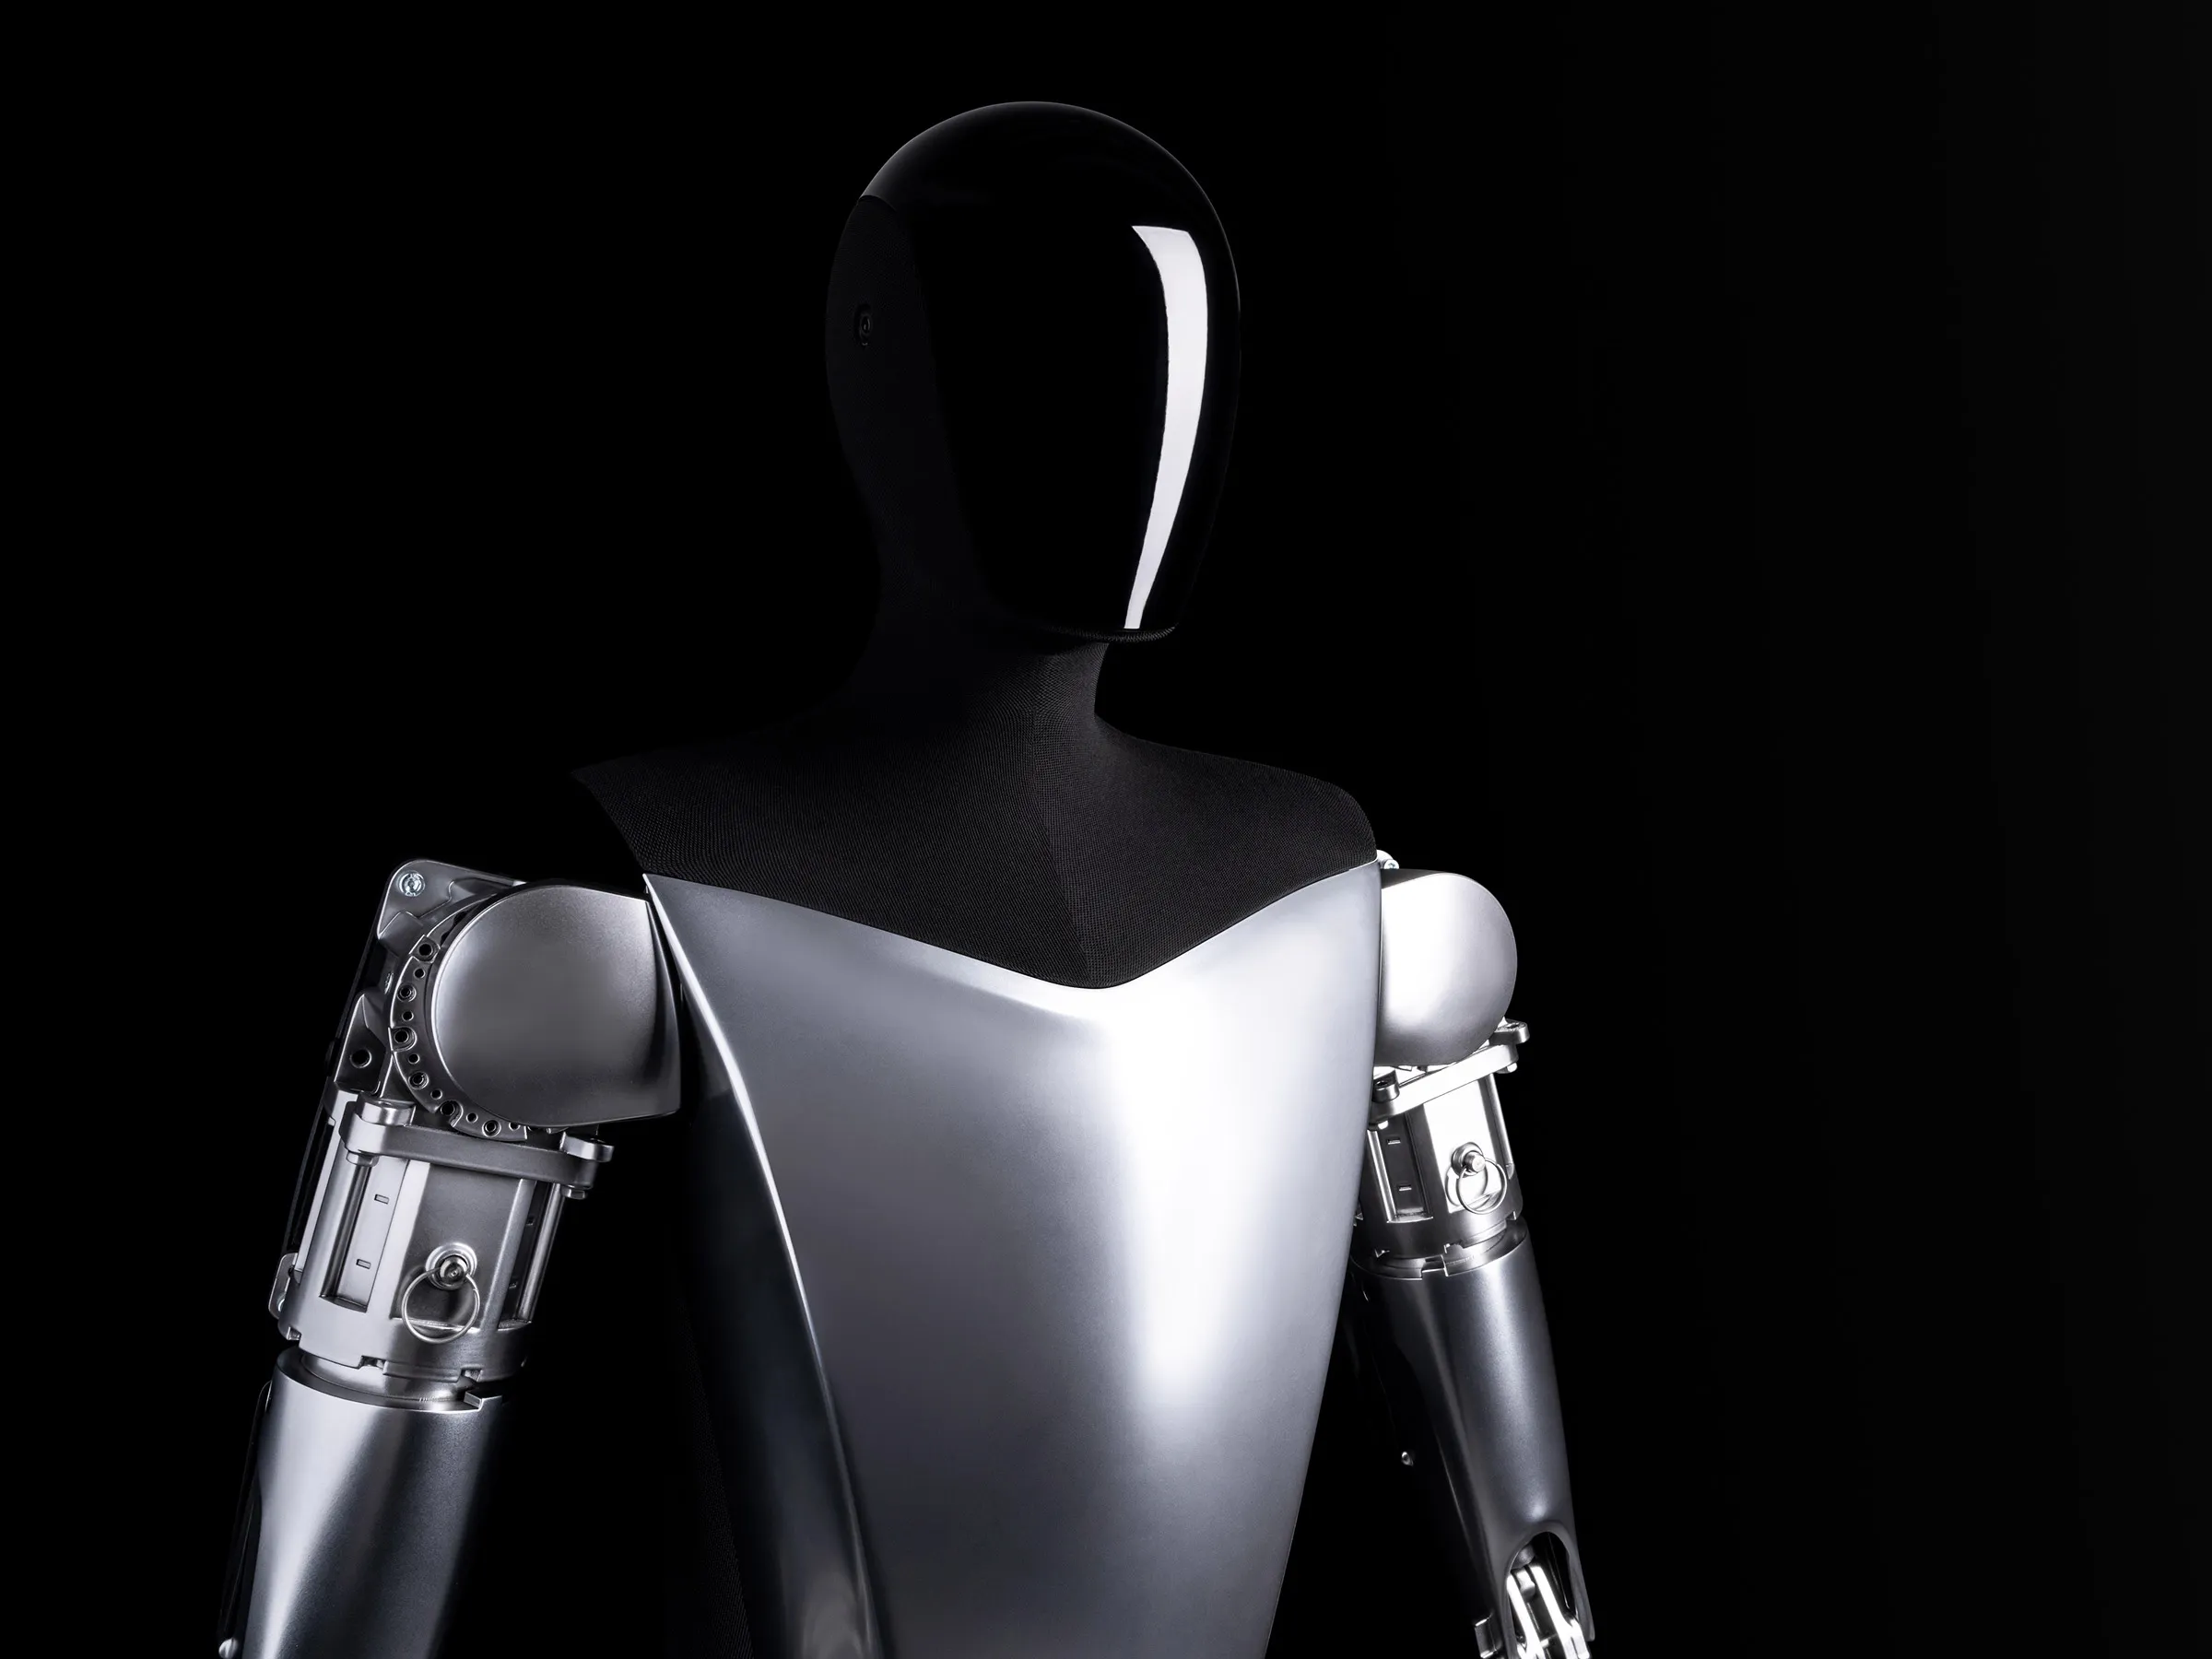 Market for humanoid robots like Tesla Optimus to grow to $152 billion by 2035 - Goldman Sachs